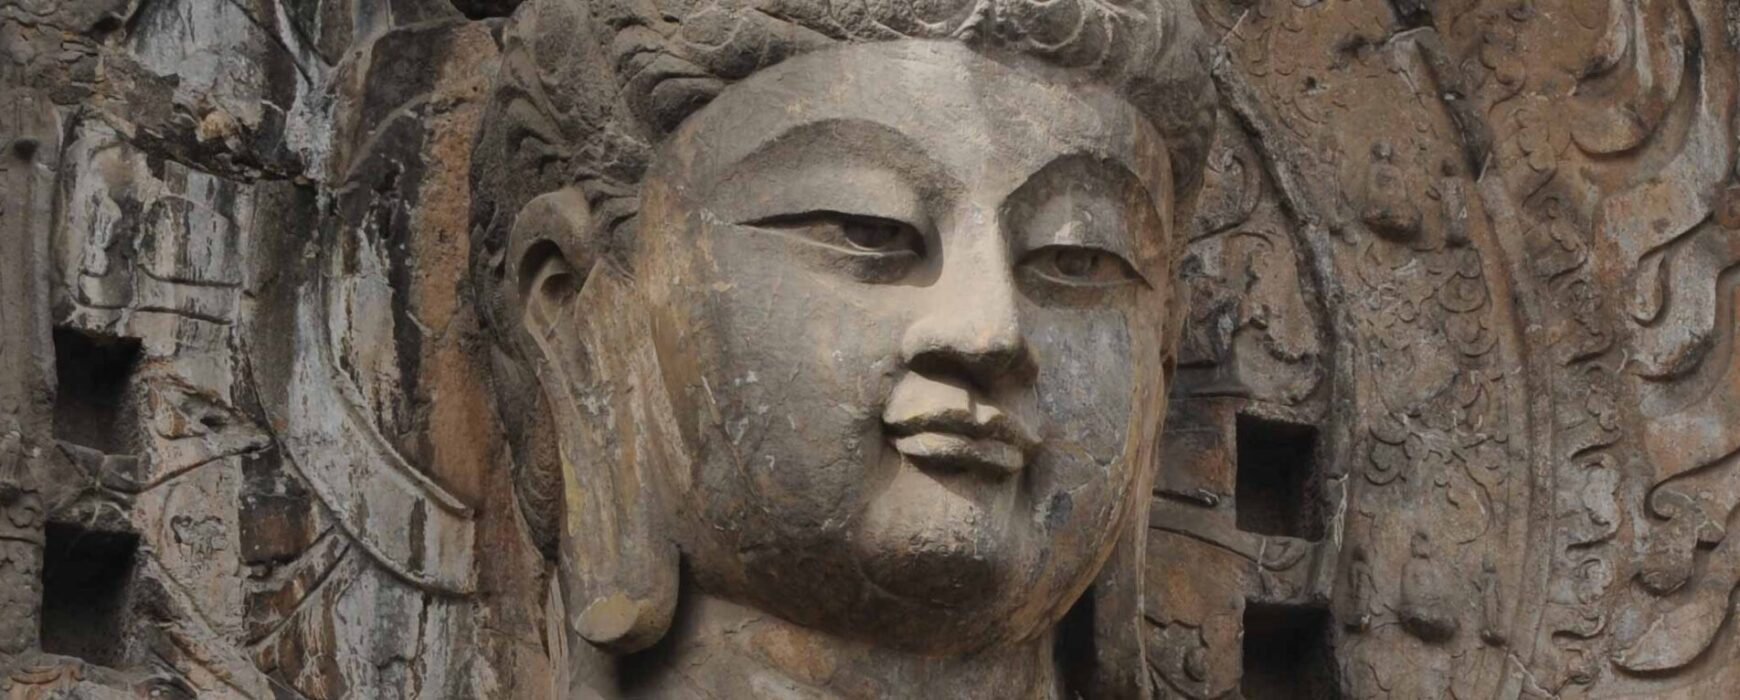 Fourth Volume of “Hualin Series on Buddhist Studies”